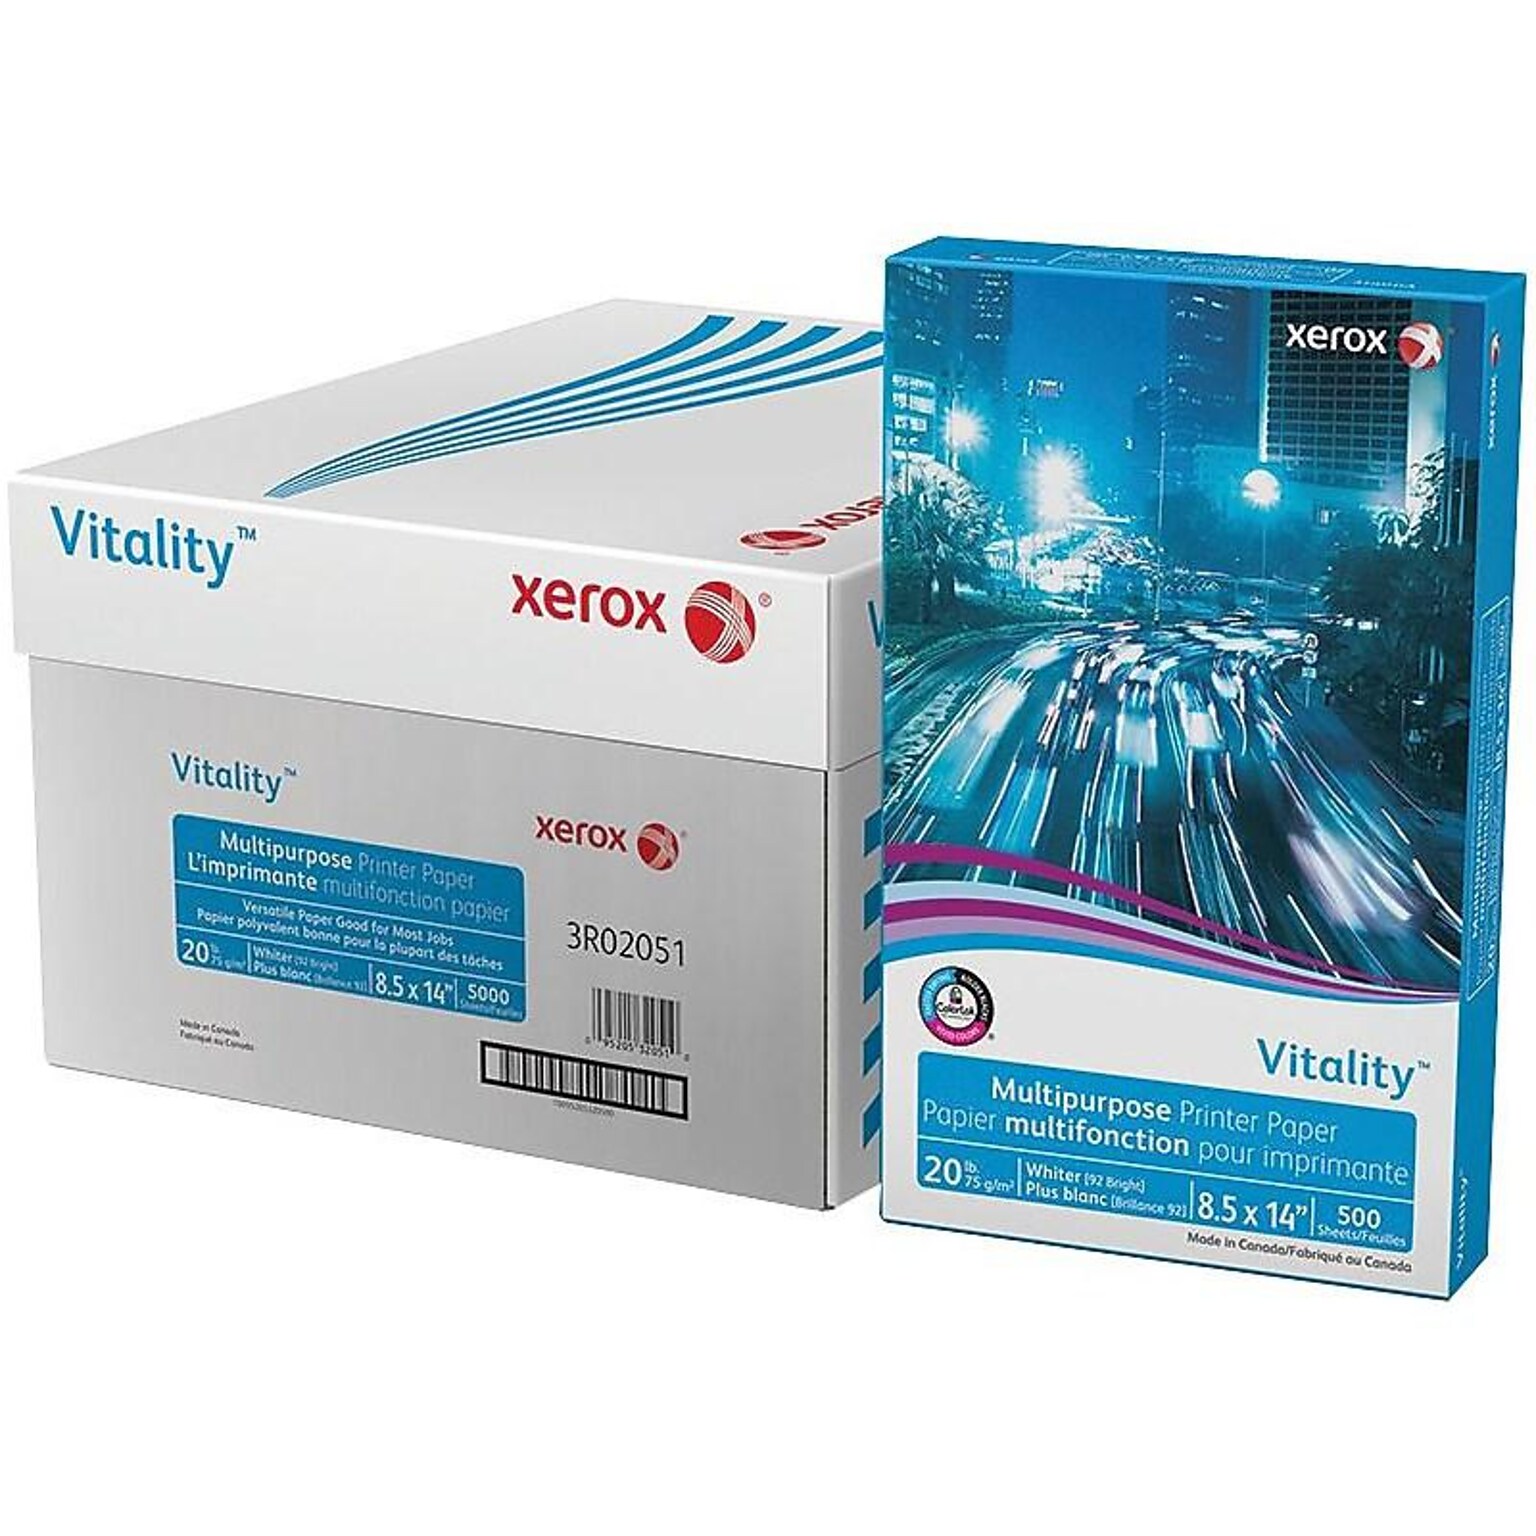 Xerox® Vitality® 8.5 x 14 Multipurpose Paper, 20 lbs., 92 Brightness, 10 Reams/Carton (3R02051)